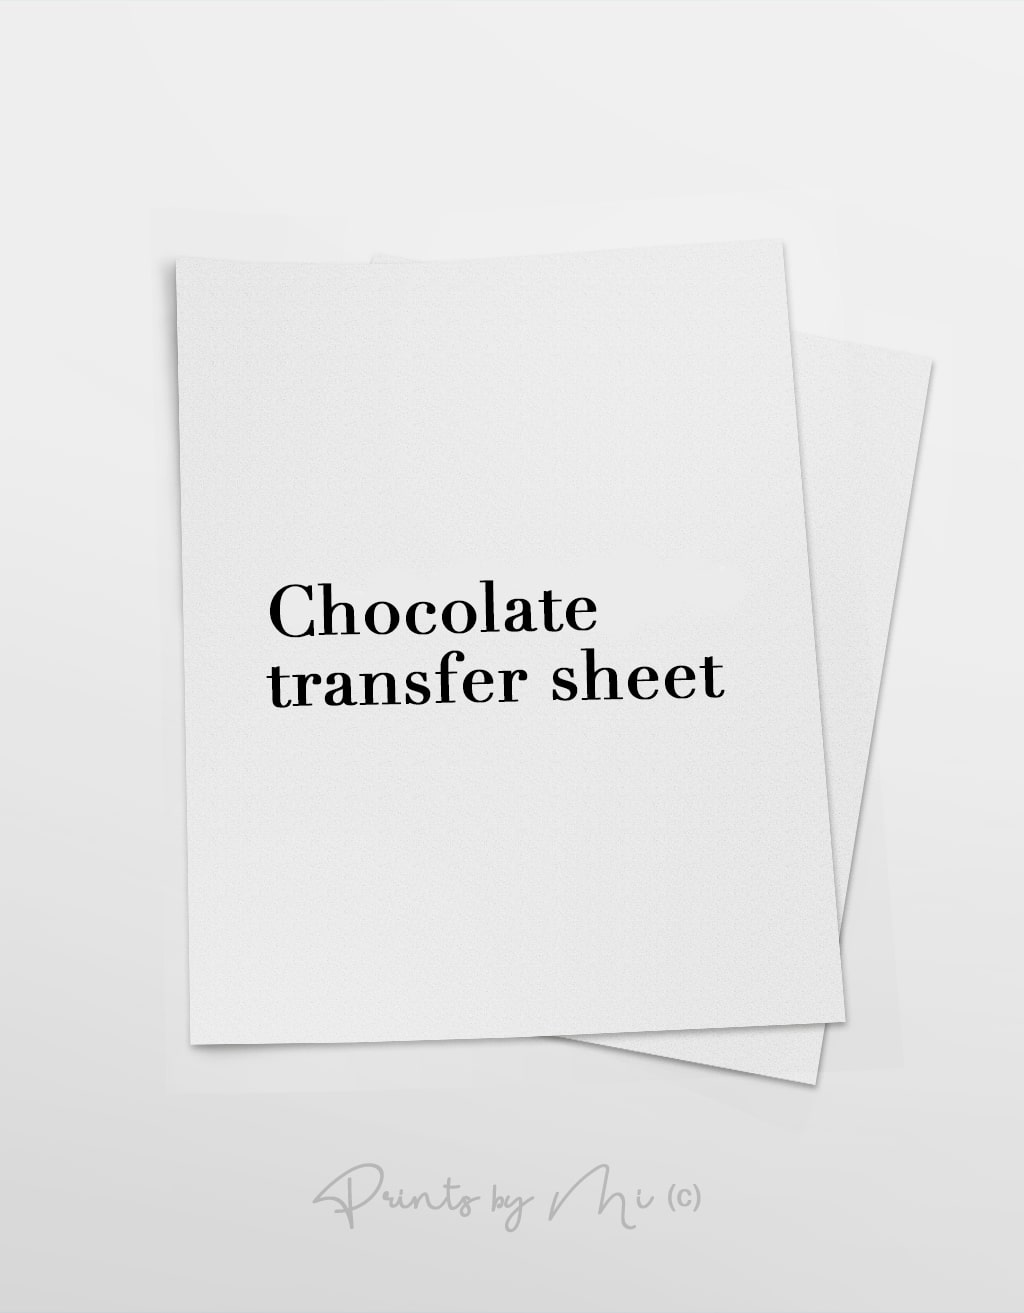 Chocolate transfer sheet